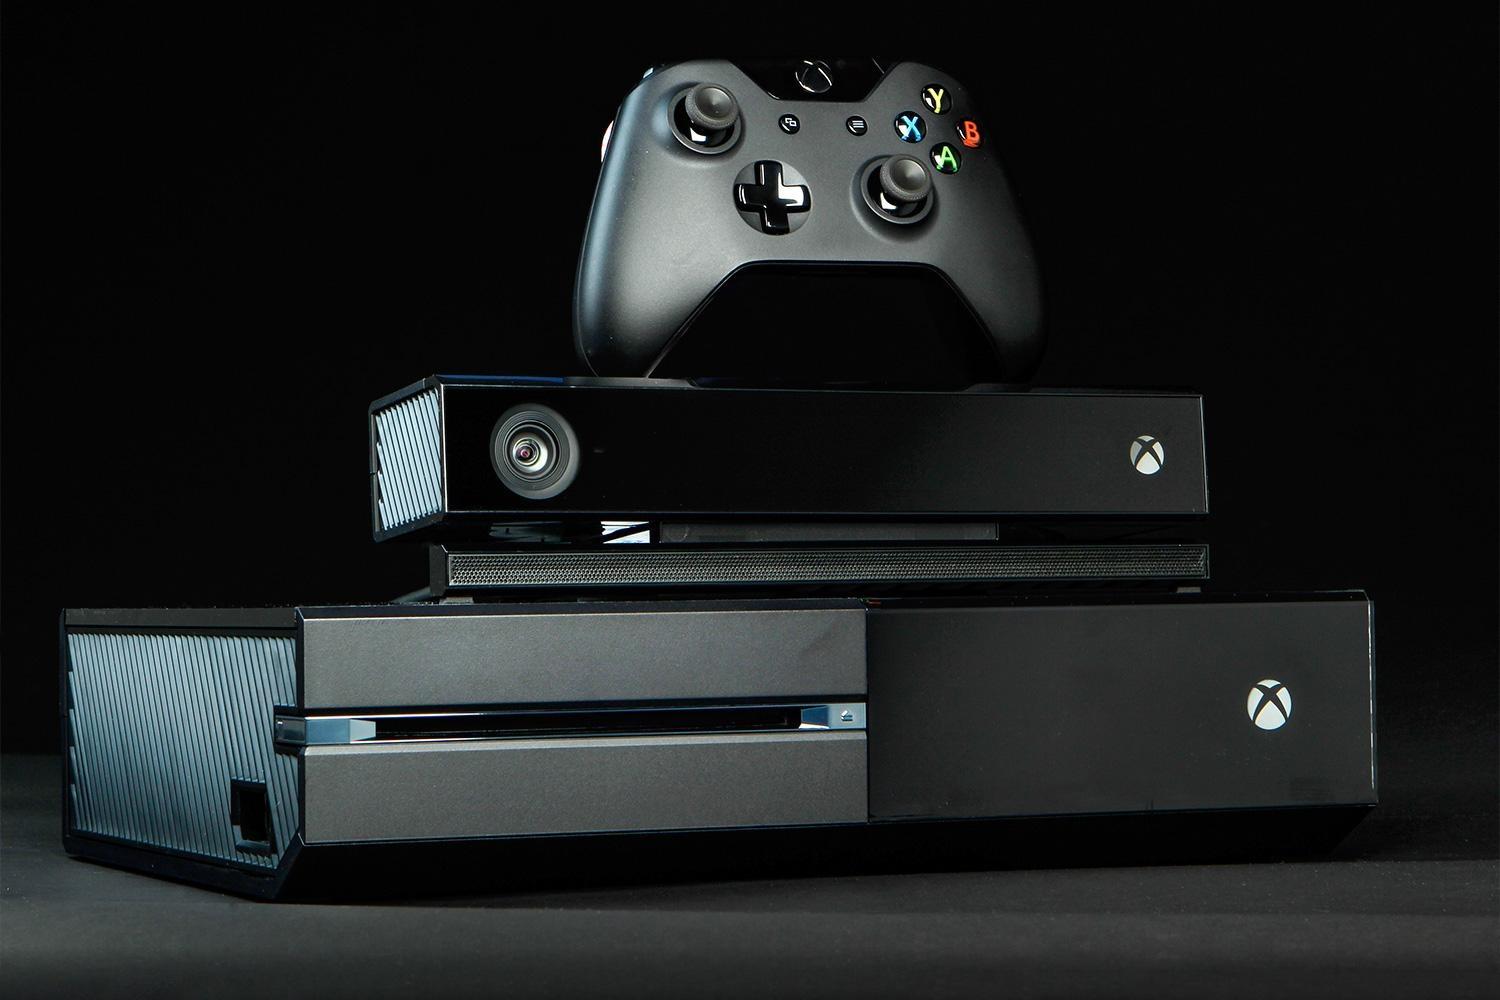 Microsoft announces the Xbox One S, its smallest Xbox yet